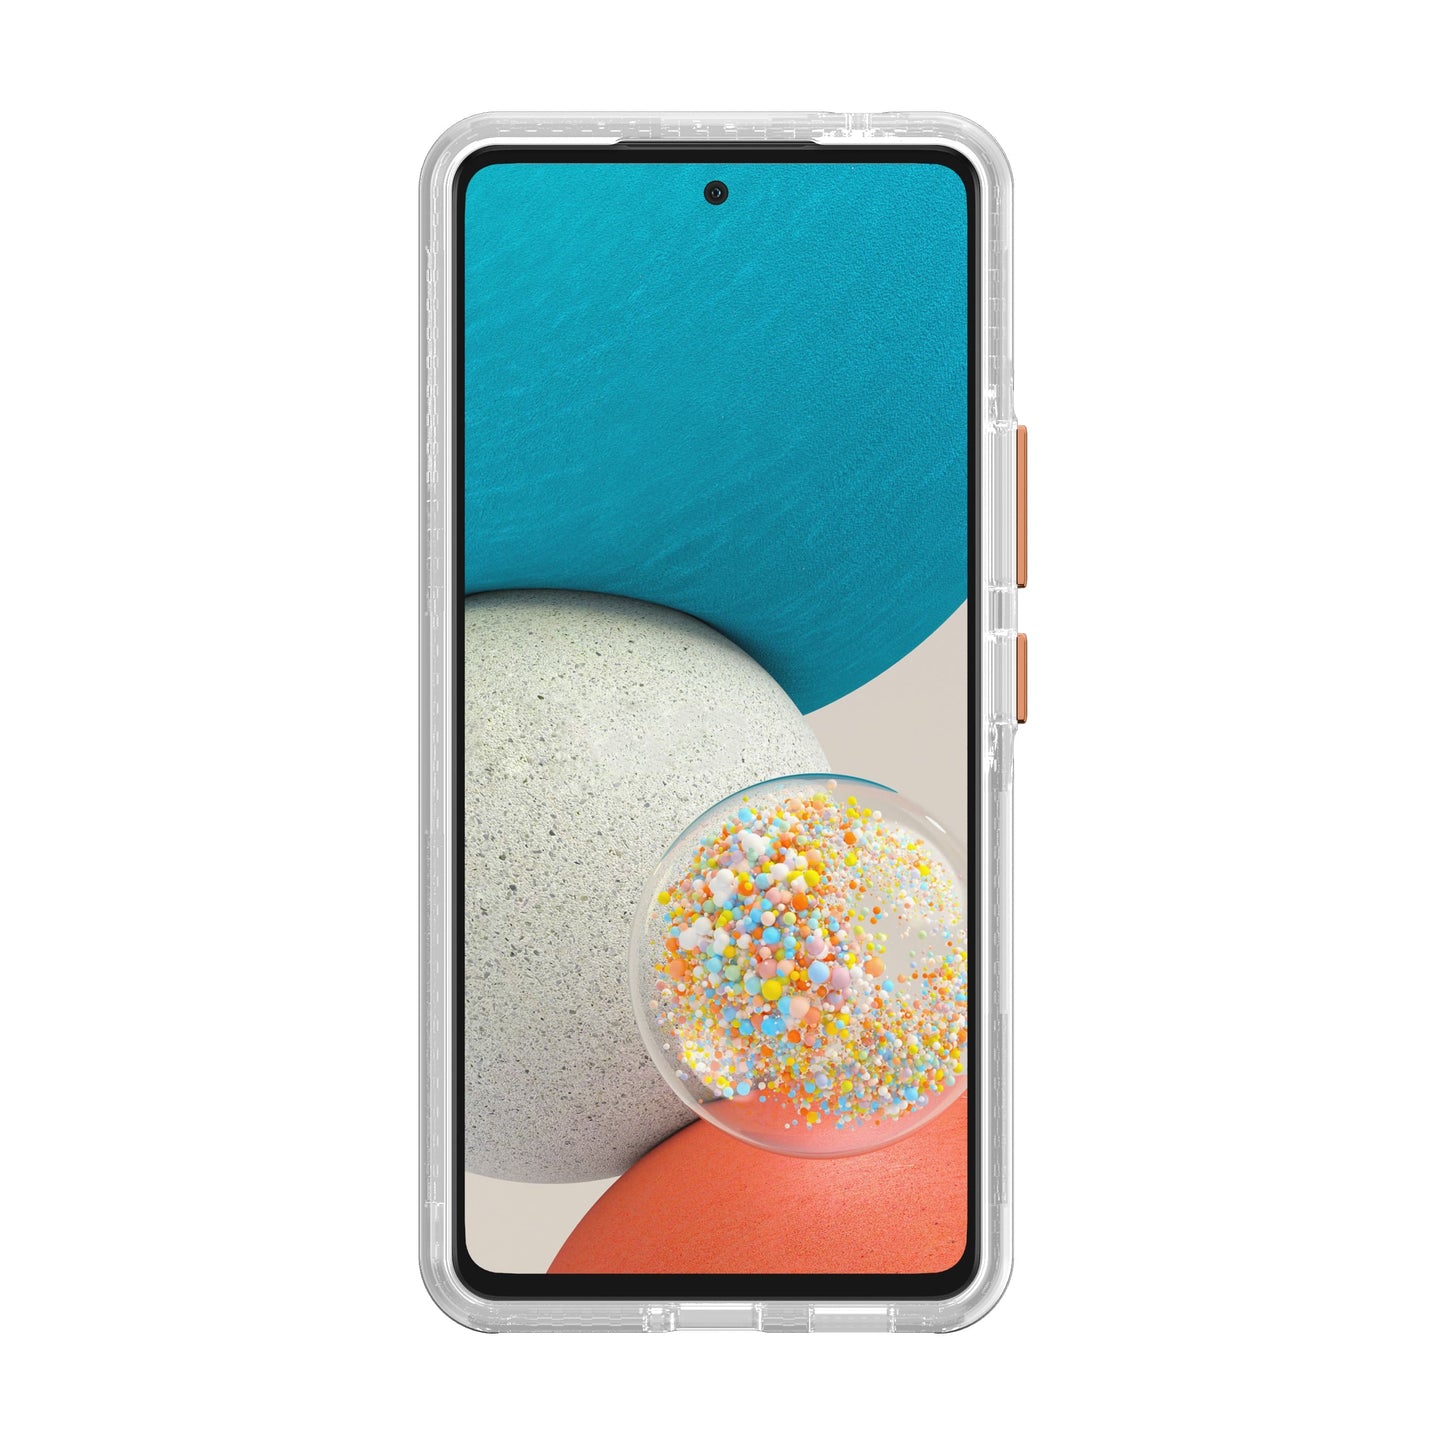 ZIZO DIVISION Series Galaxy A53 5G Case - Wanderlust